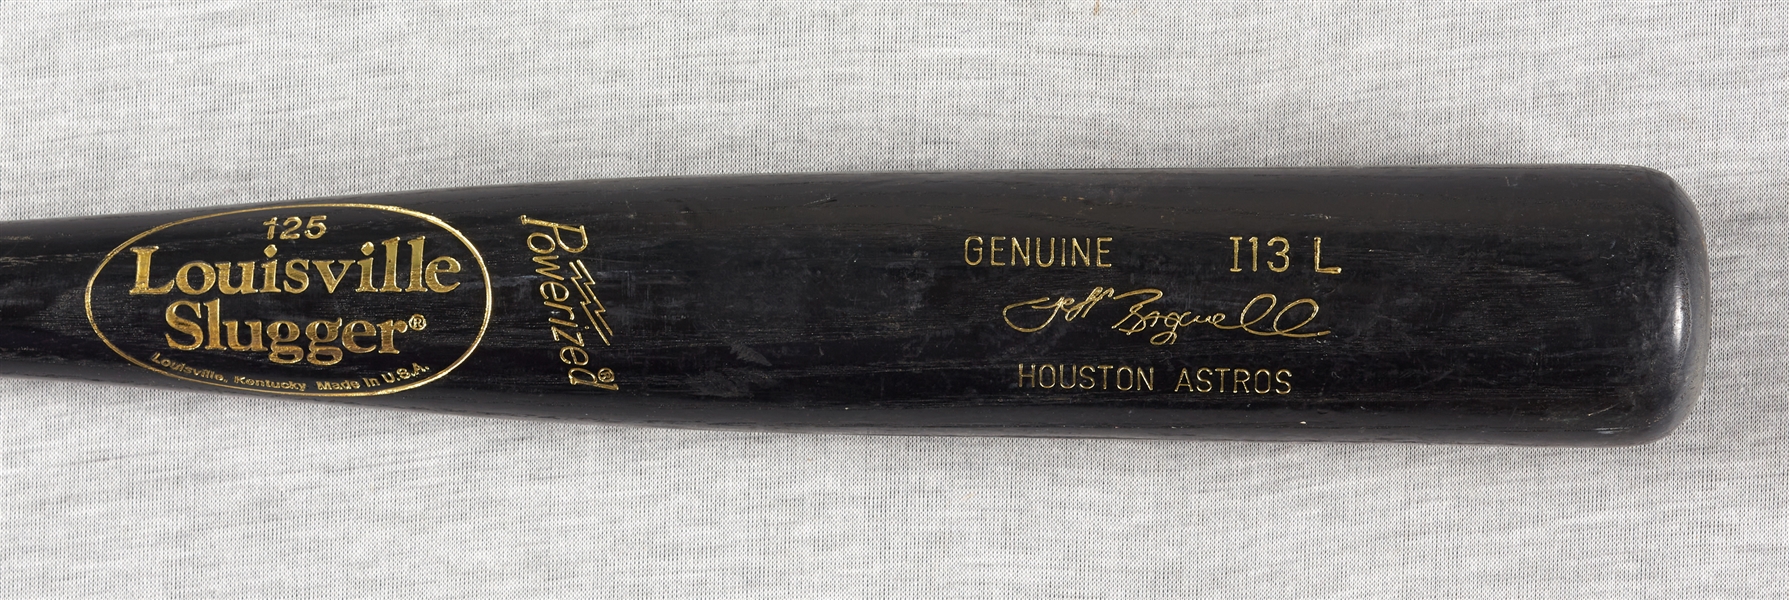 Jeff Bagwell Game-Used Louisville Slugger Bat